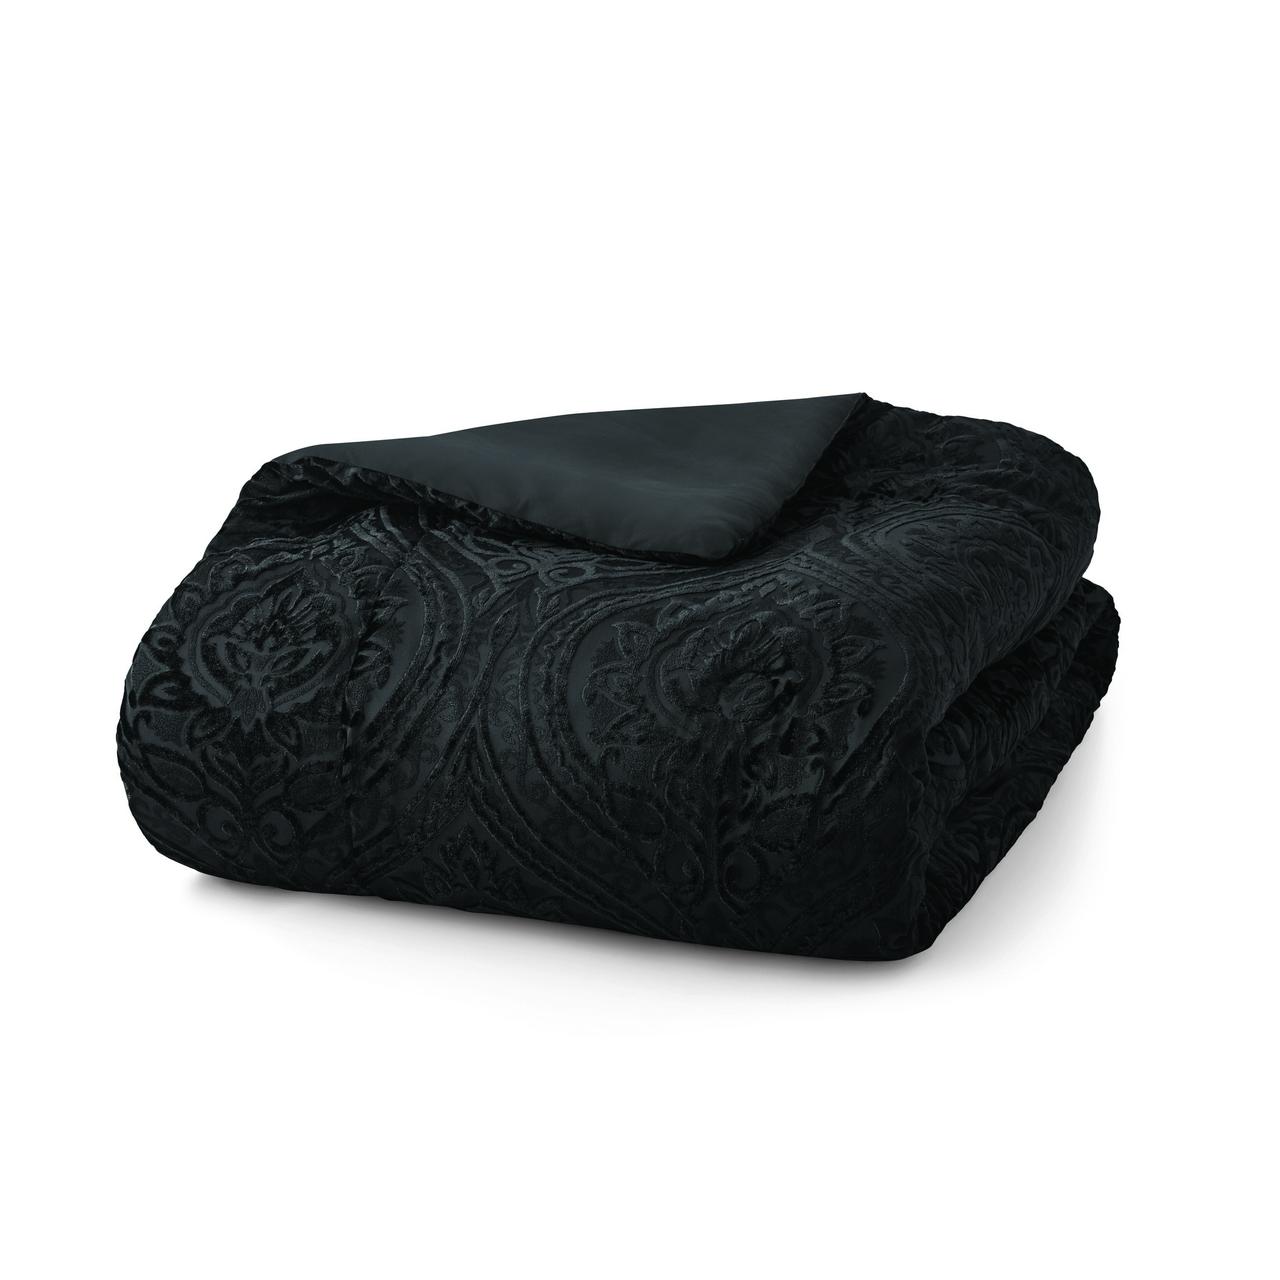 Mainstays 7-Piece Black Cougar Ogee Woven Comforter Set, King - image 4 of 6